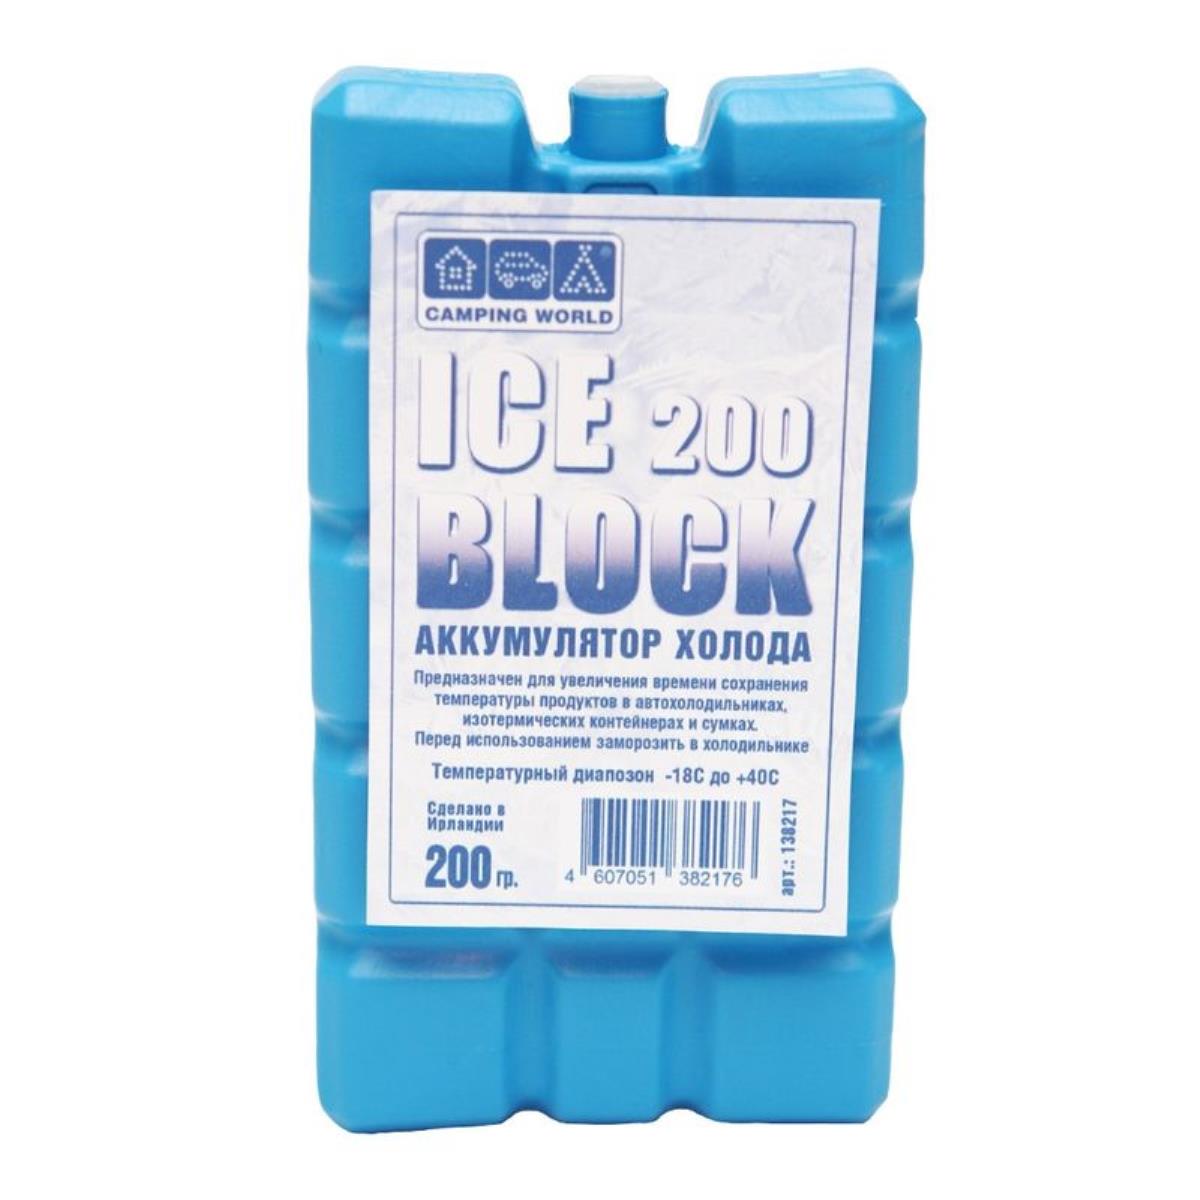 Аккумулятор холода Iceblock (хладоэлемент) 200 гр 